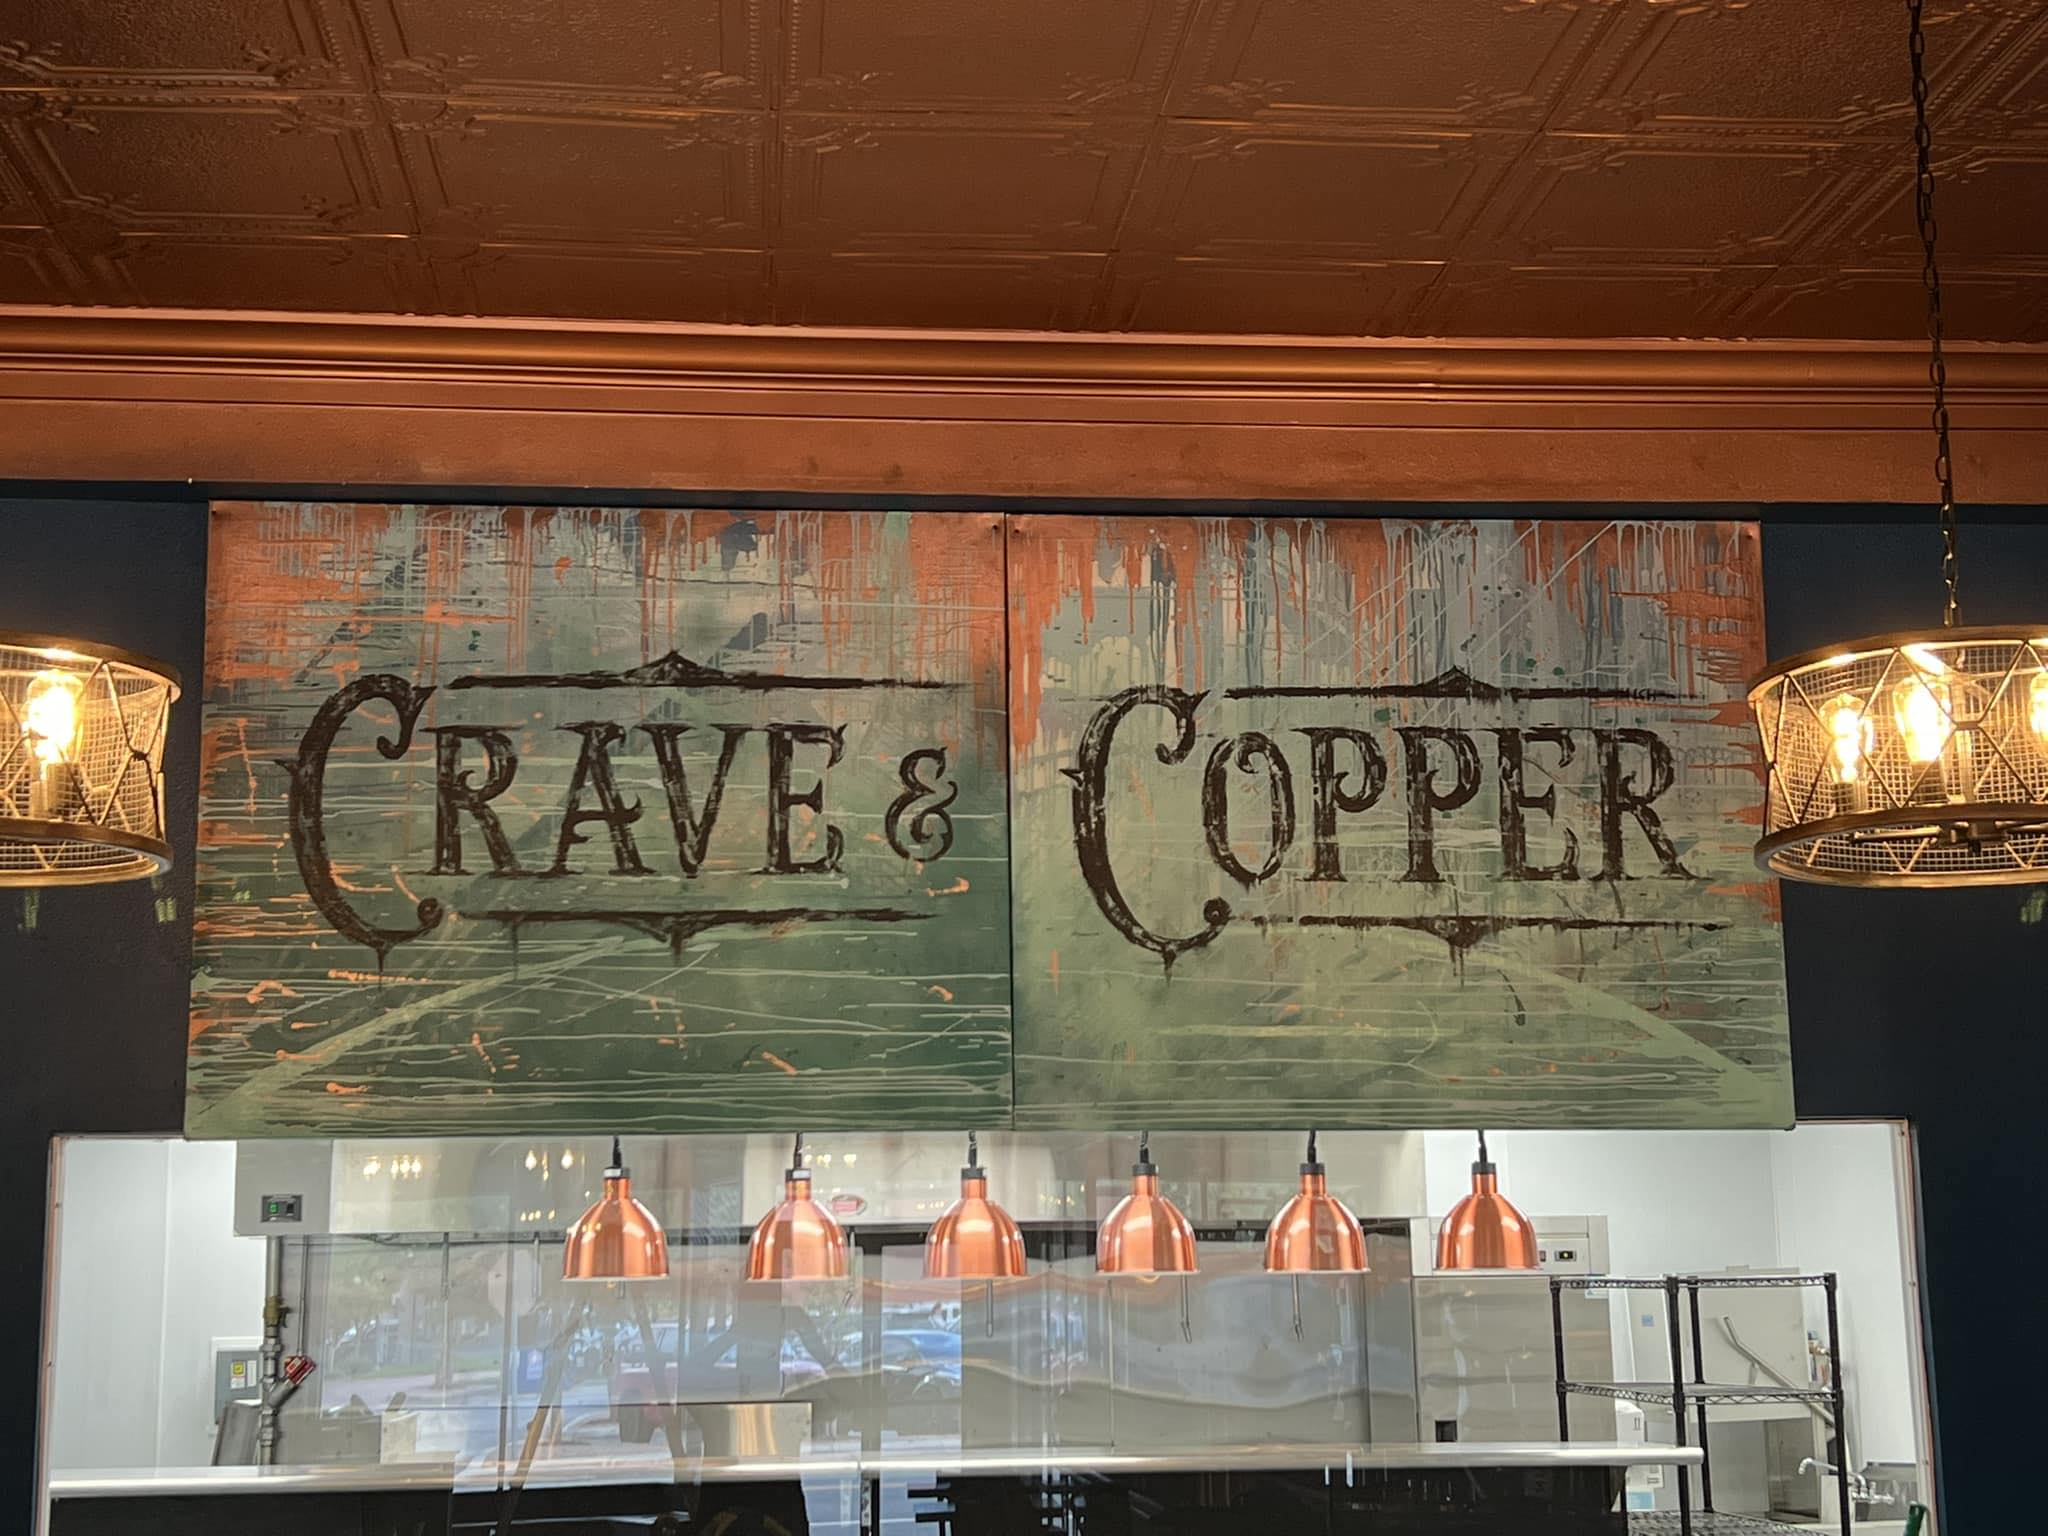 Crave & Copper sign.